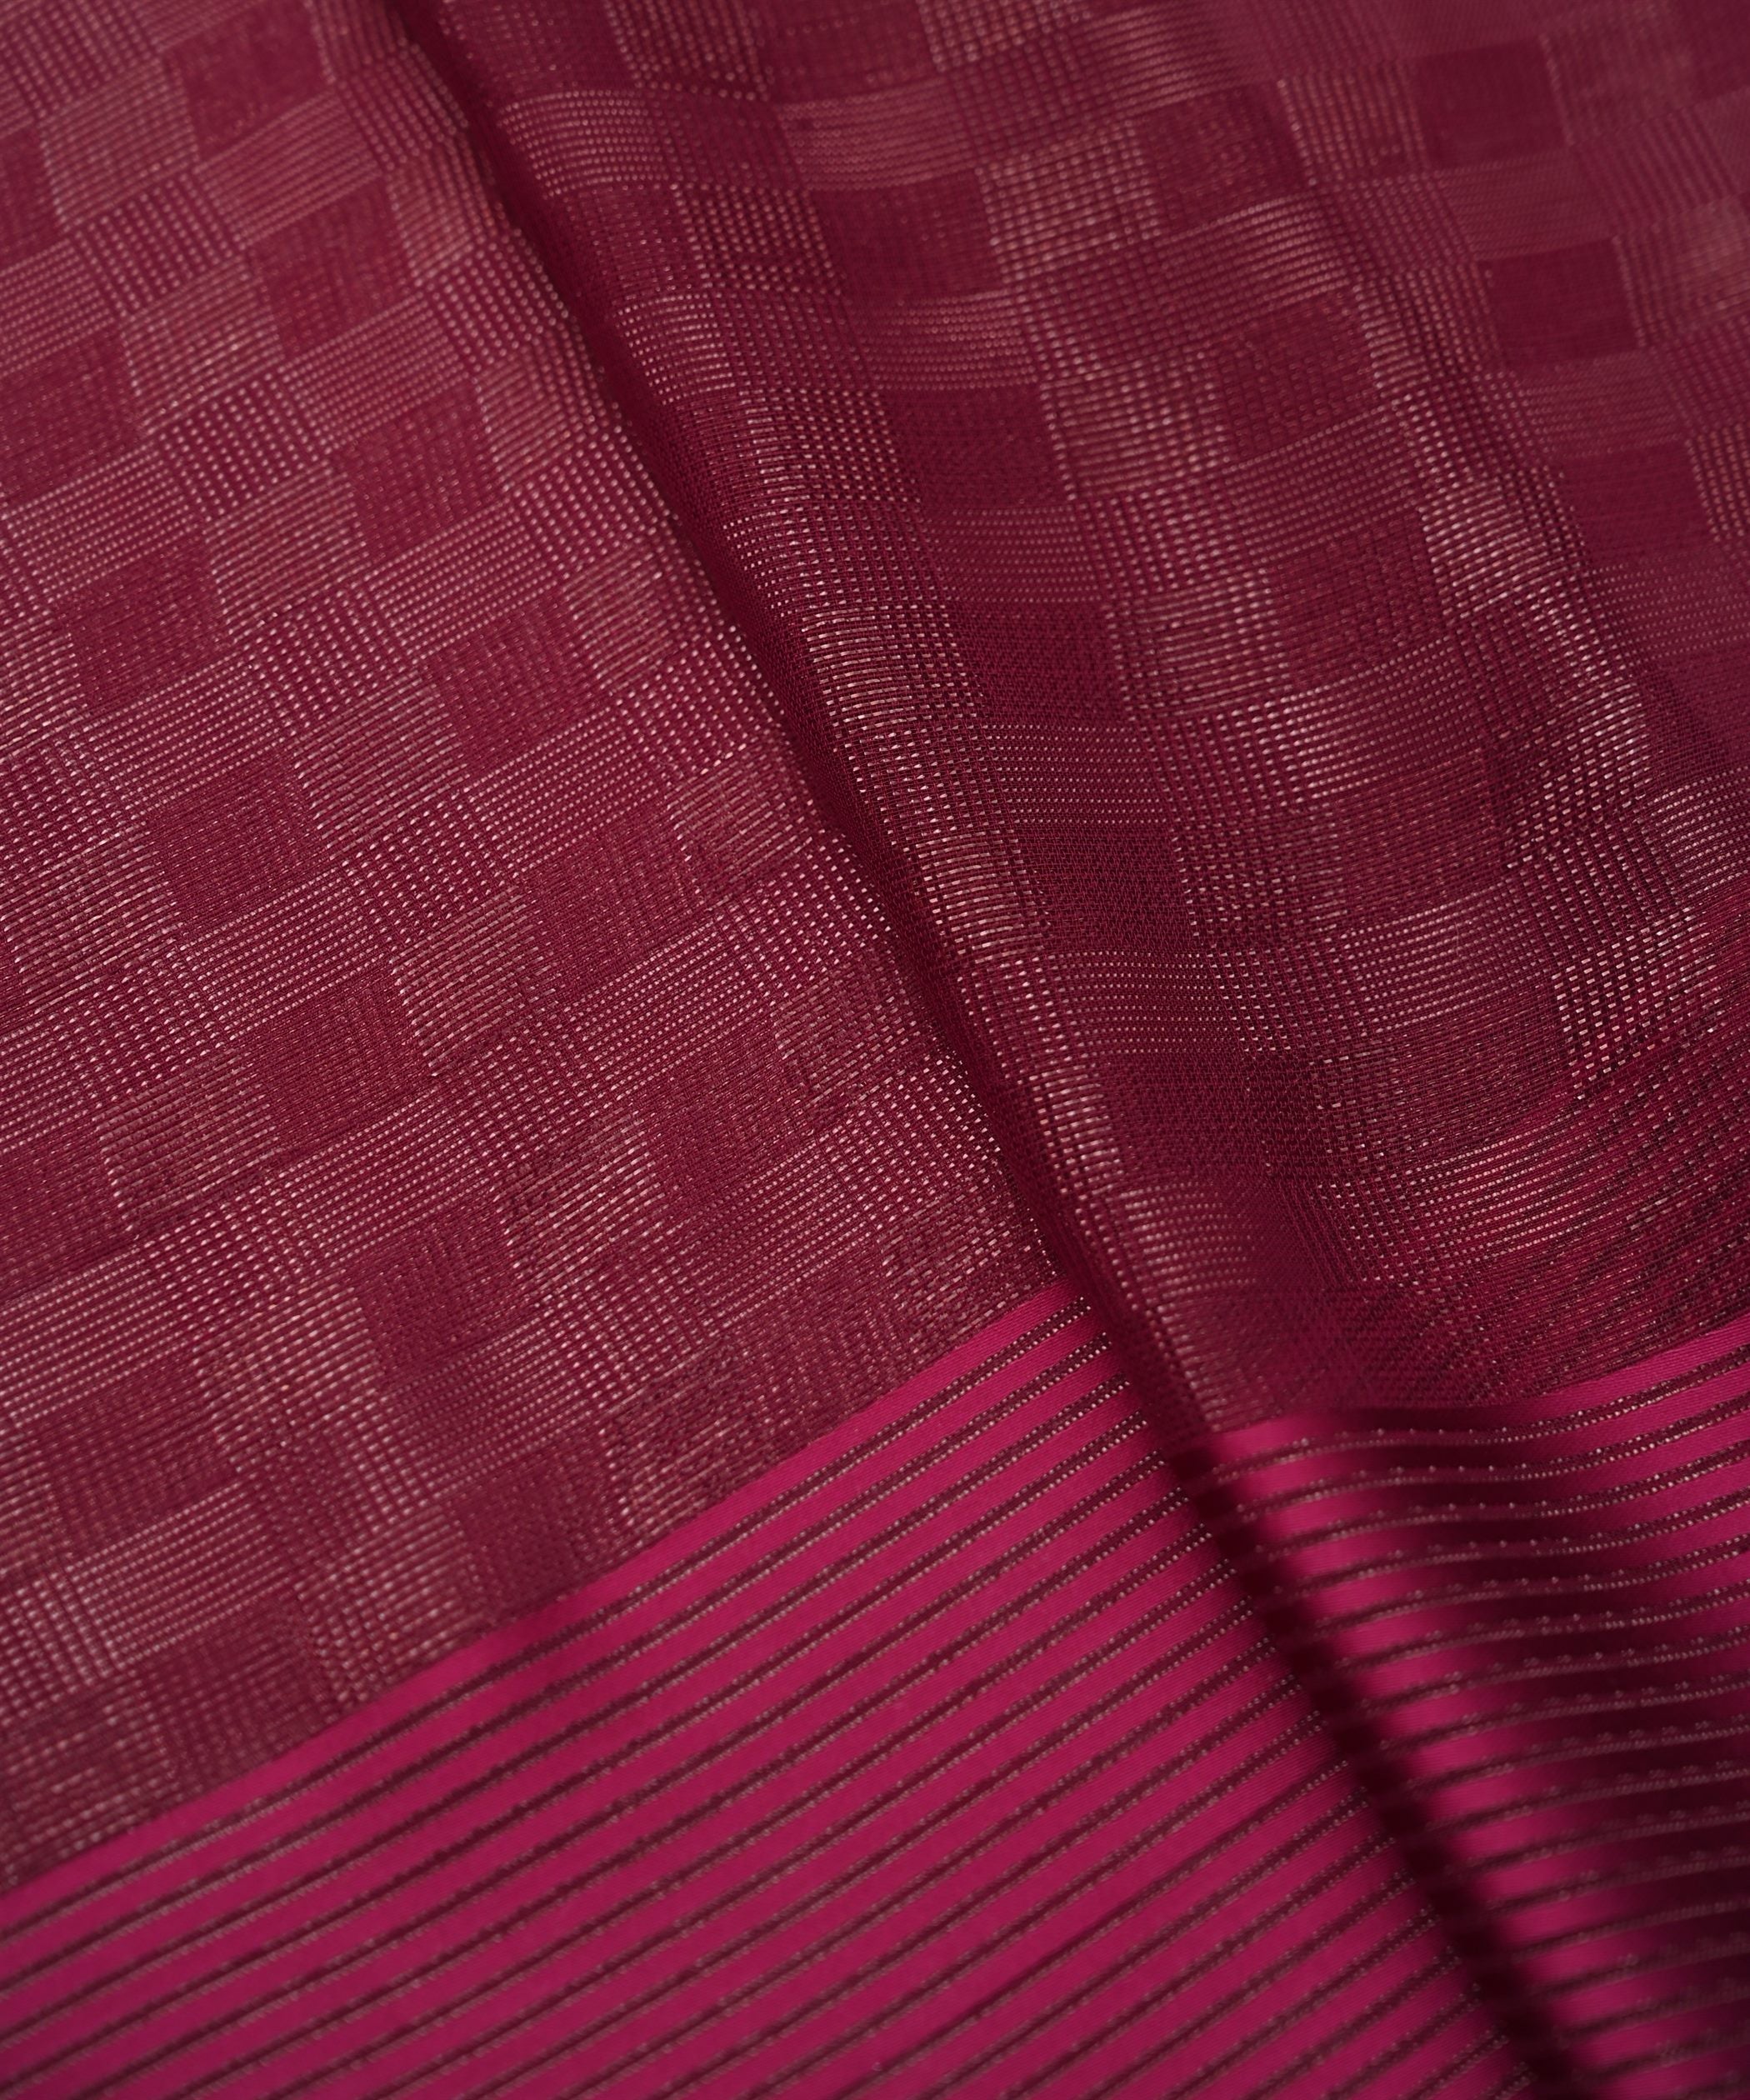 Wine Georgette Fabric with Zari Stripes and Satin Border